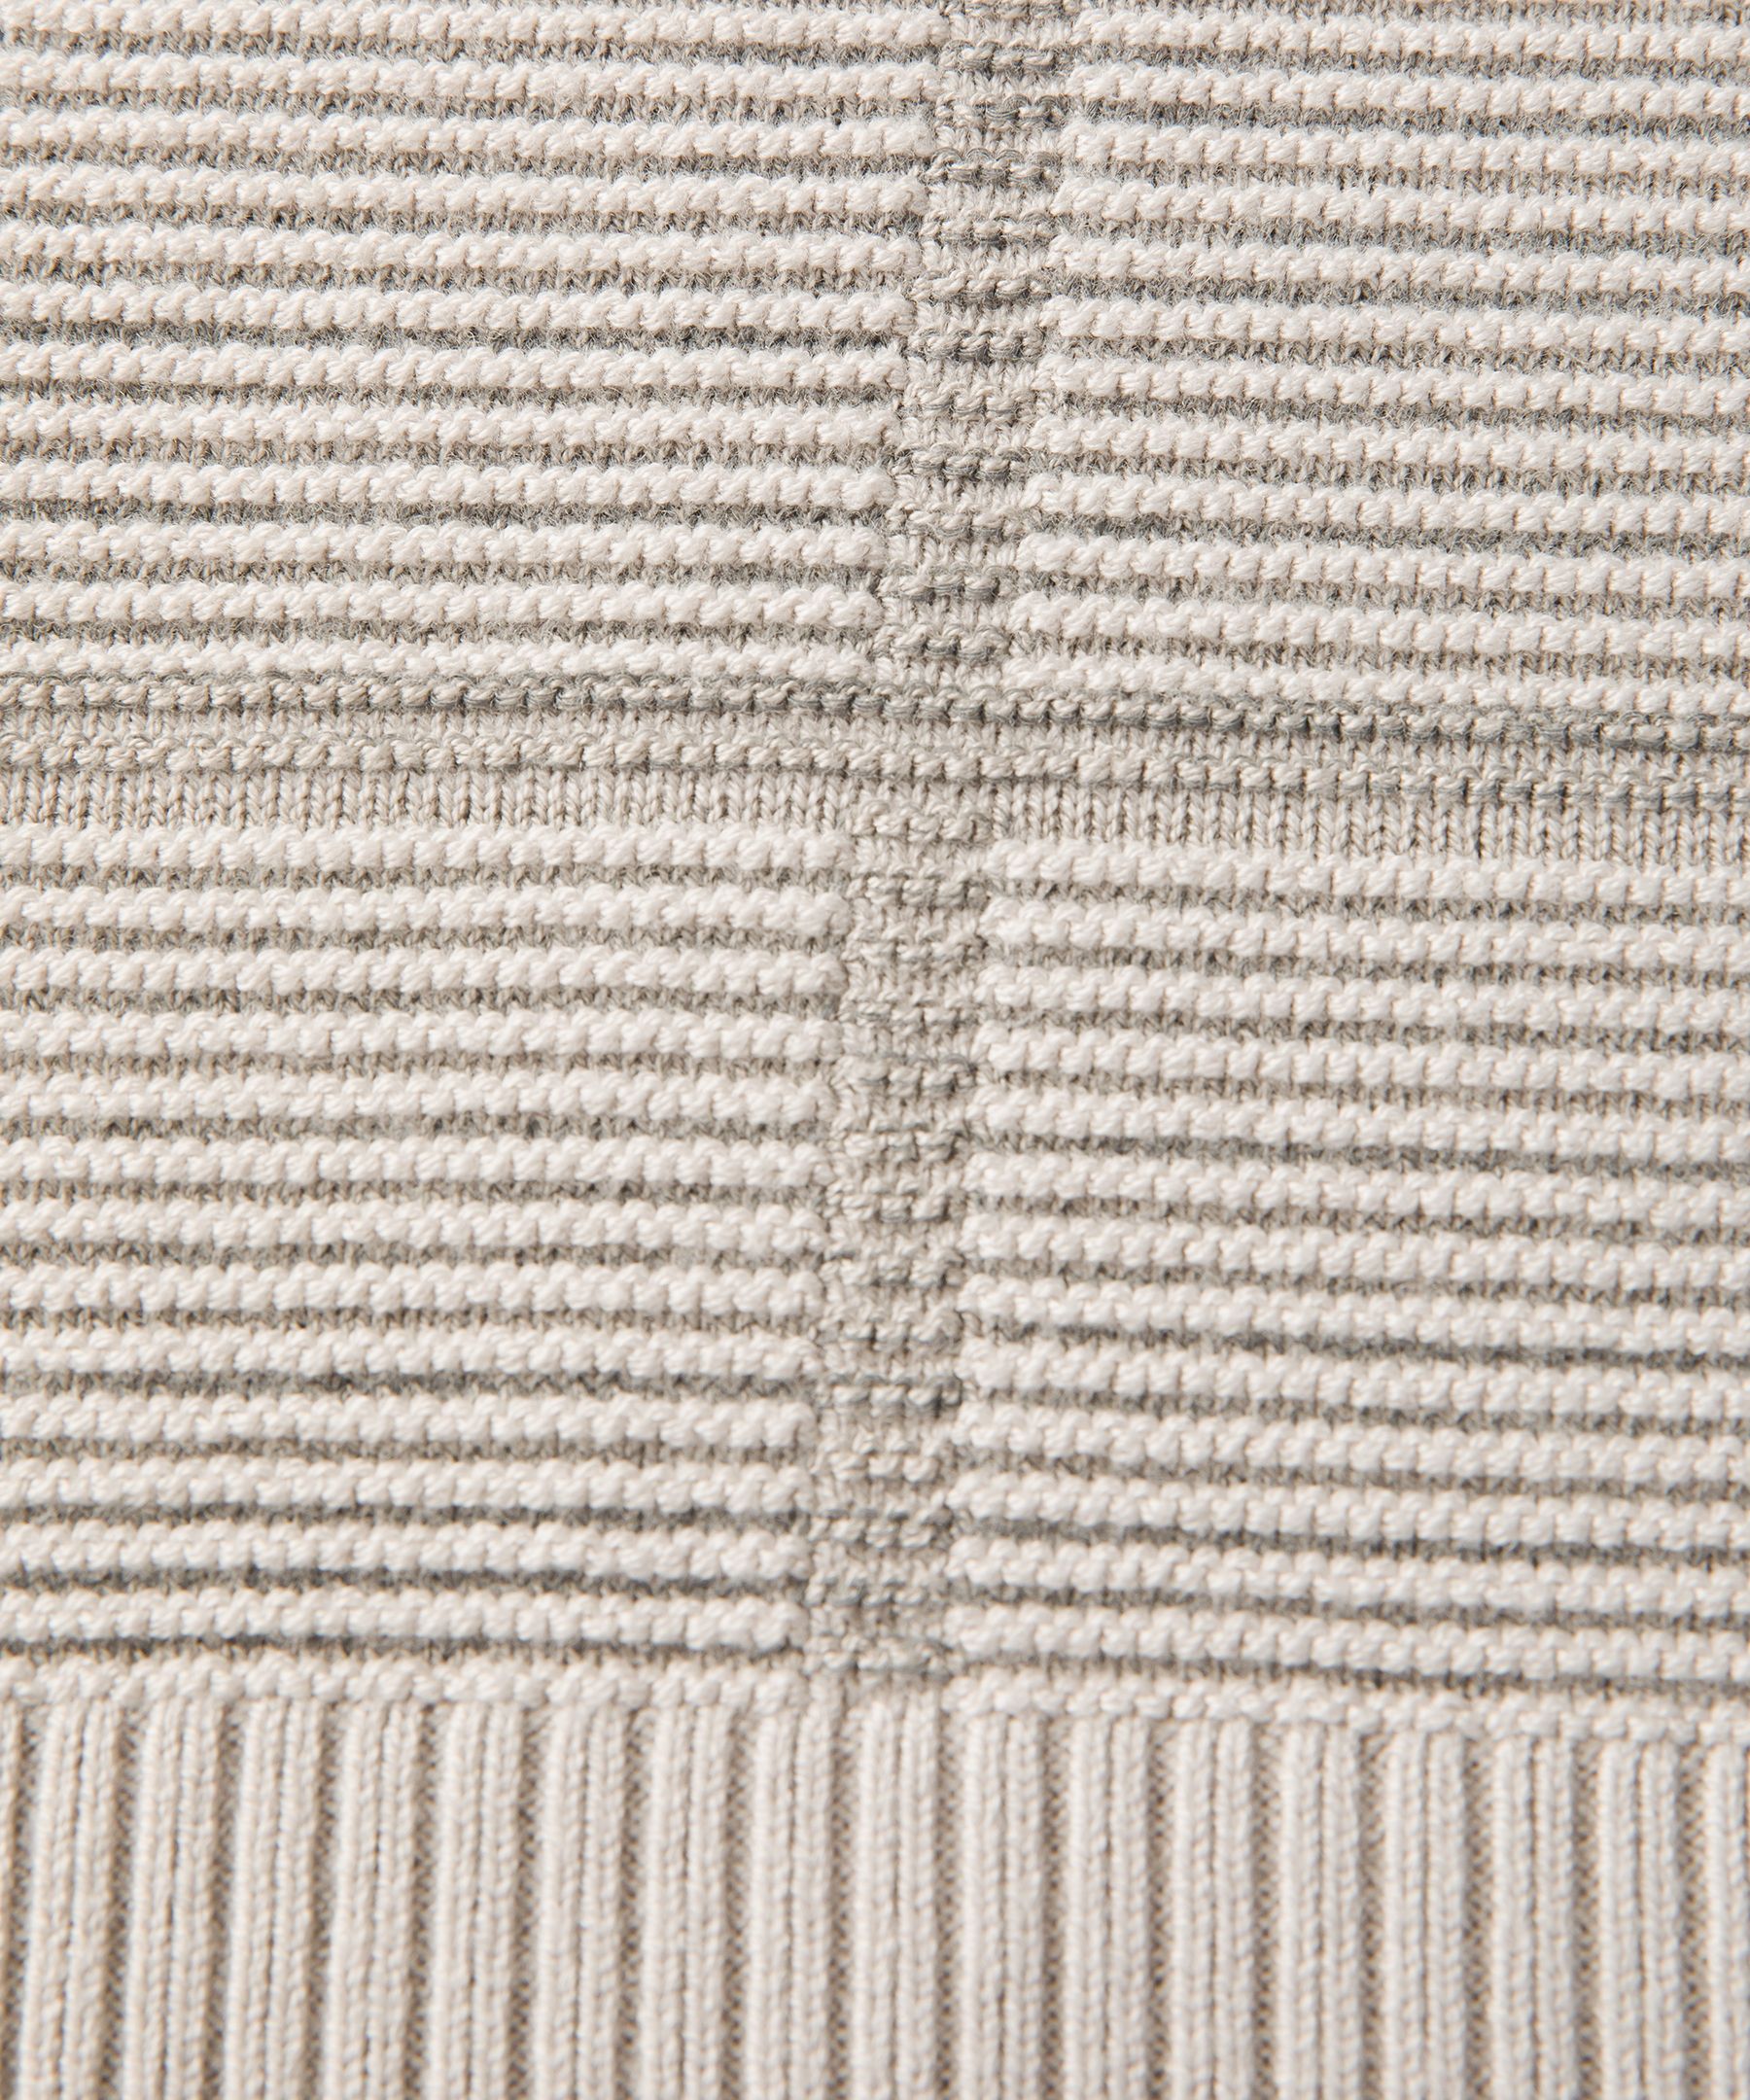 lululemon lab Reflective Knit Crewneck Sweater | Lululemon FR